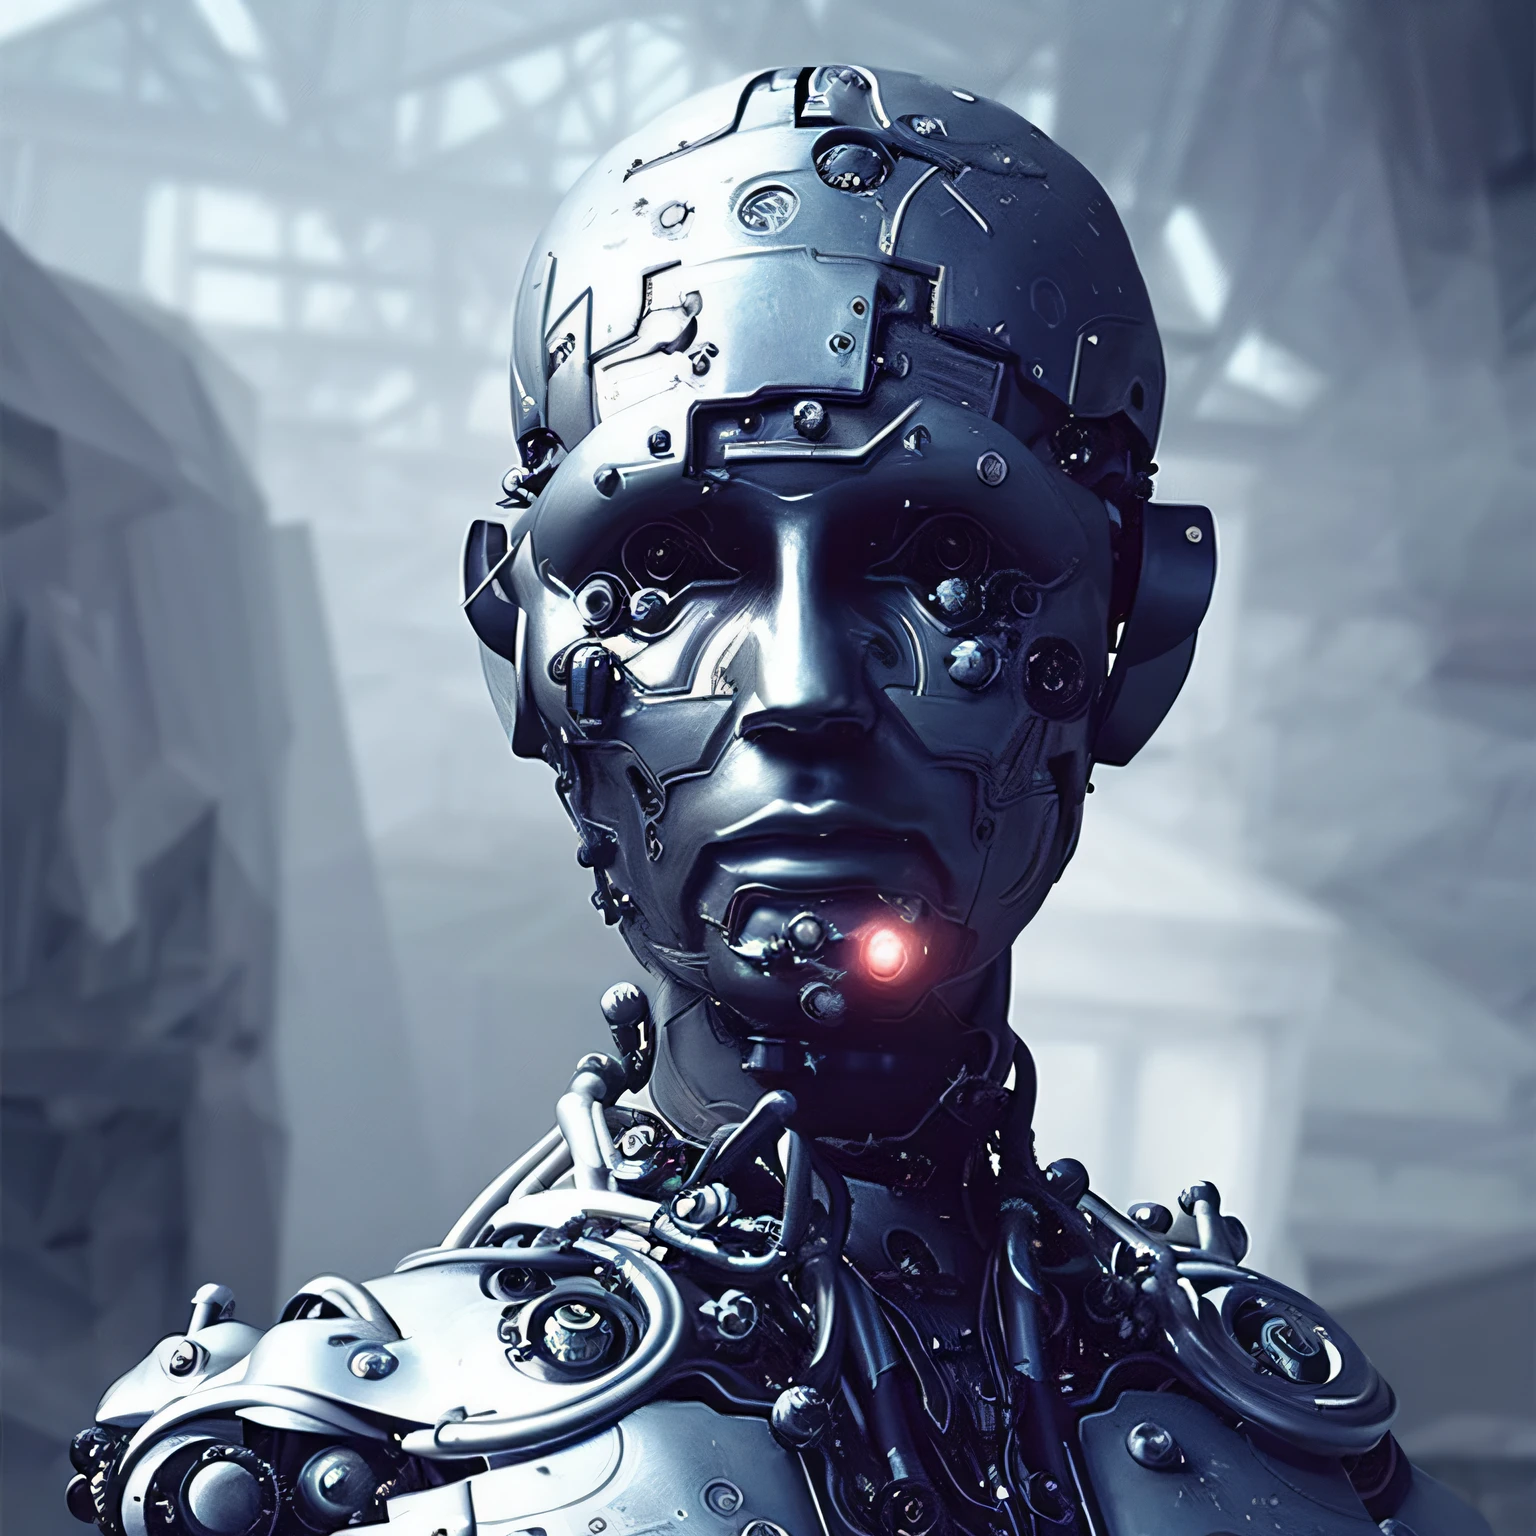 Cyborgdiffusion 由 greg rutkowski 创作的机器人肖像, 崔成, 米切尔·莫尔豪泽, 马切伊·库恰拉, 丁先生, 马克西姆·维热因, 彼得·科尼格, 血源性, 8K 真实感, 电影灯光, 高清, 高细节, 戏剧性, 黑暗氛围, artstation 上的热门